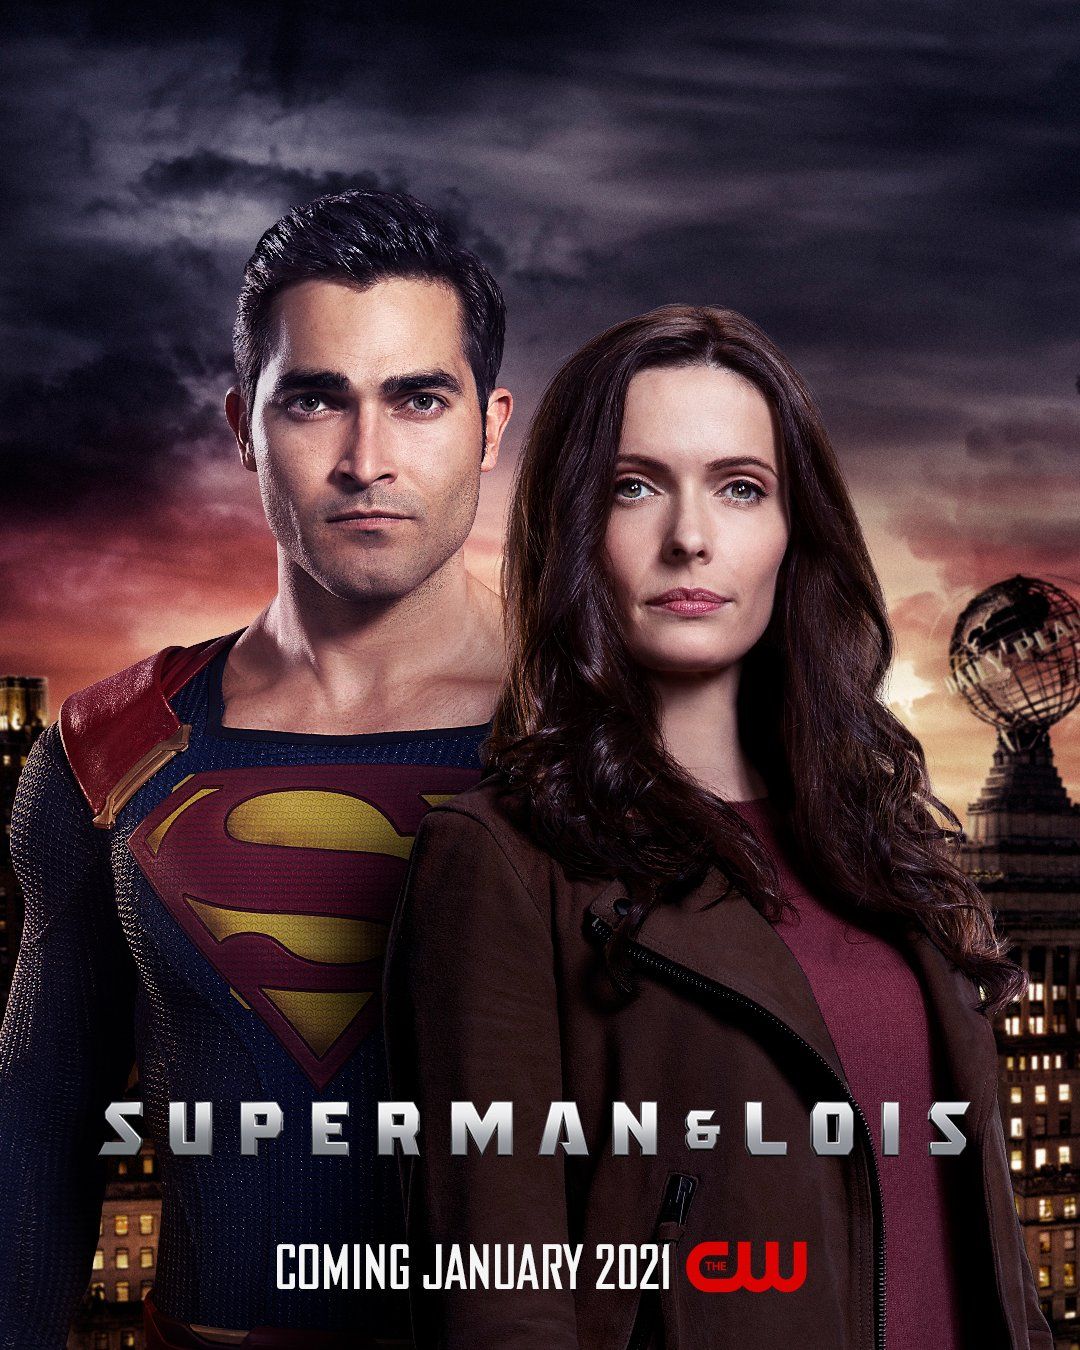 Tyler Hoechlin as Clark Kent Elizabeth Tulloch as Lois Lane Arrowverse Superman and Lois Poster